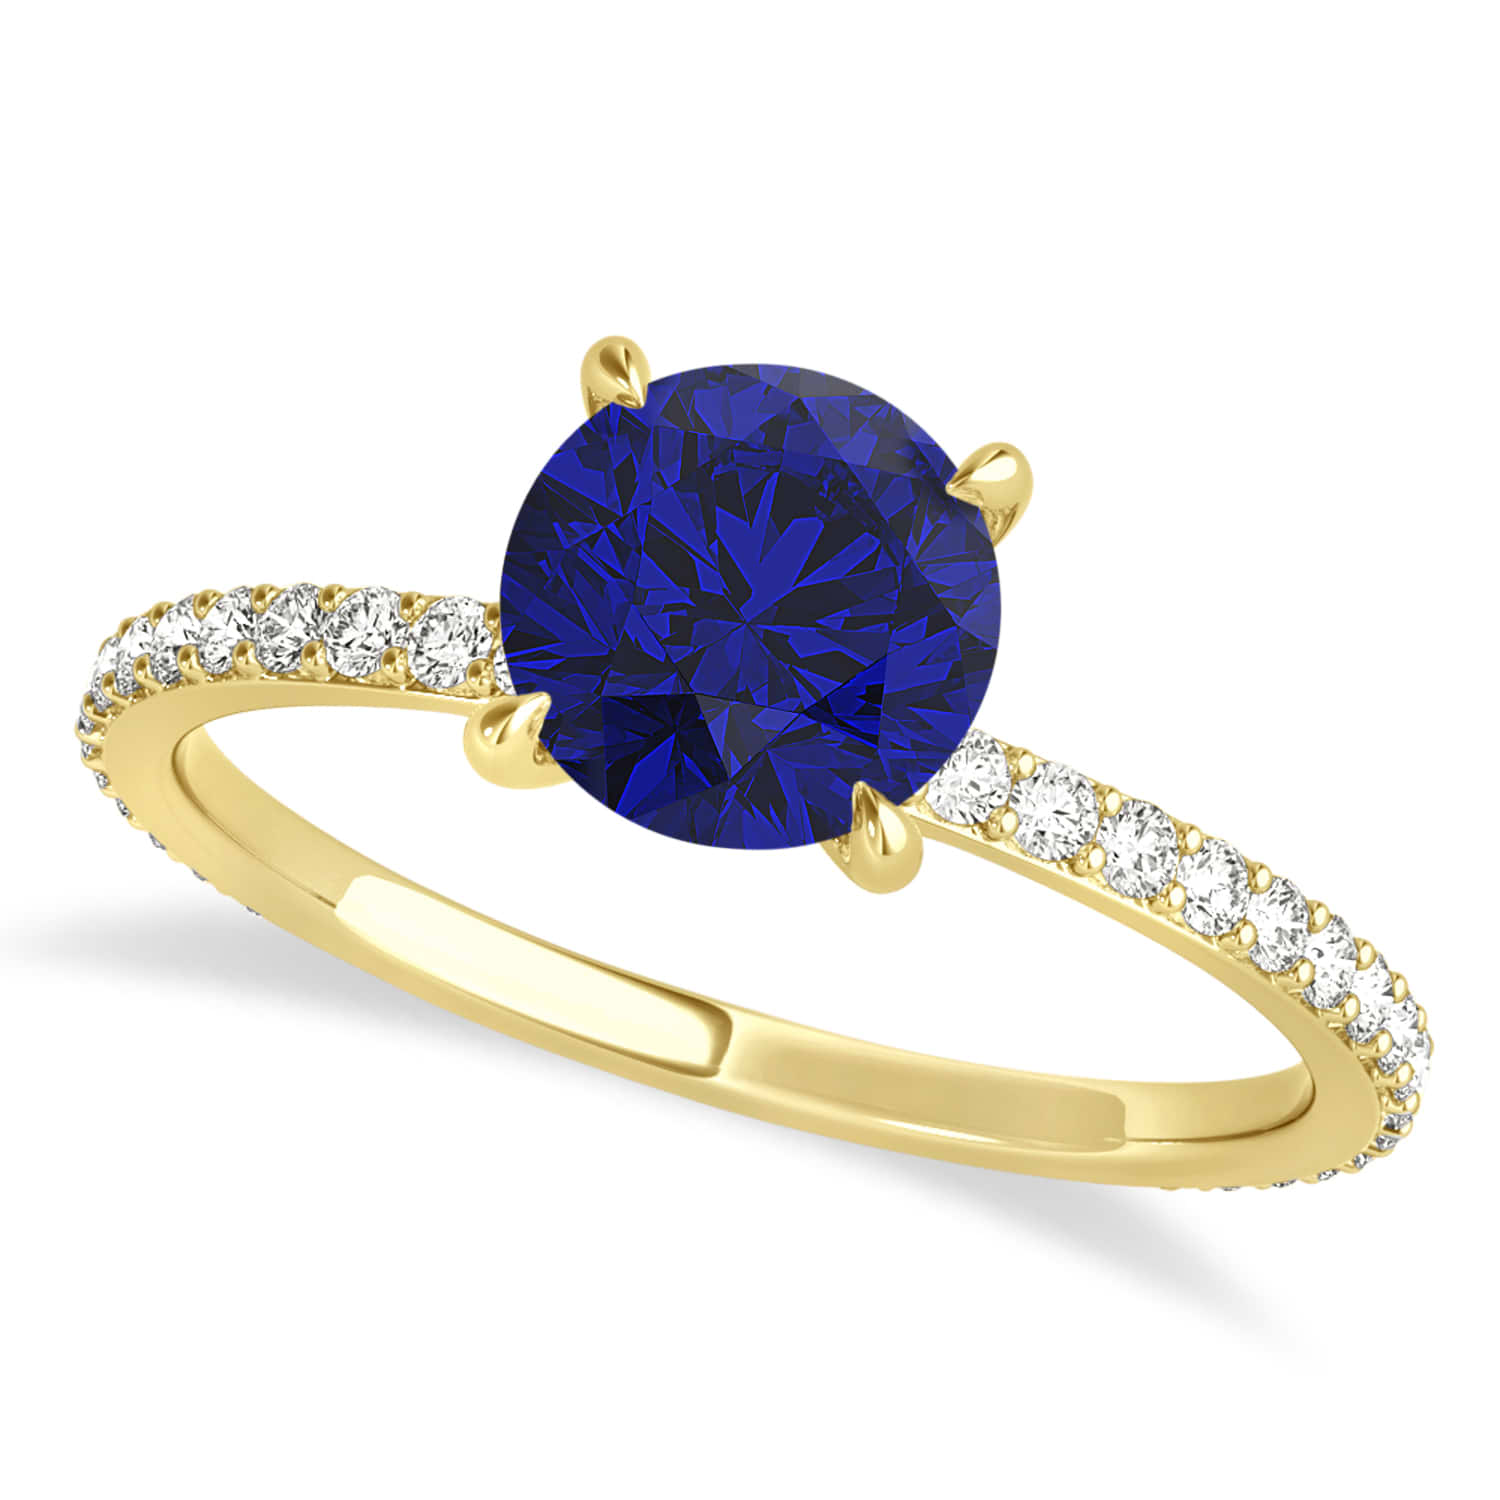 Round Blue Sapphire & Diamond Hidden Halo Engagement Ring 14k Yellow Gold (1.68ct)